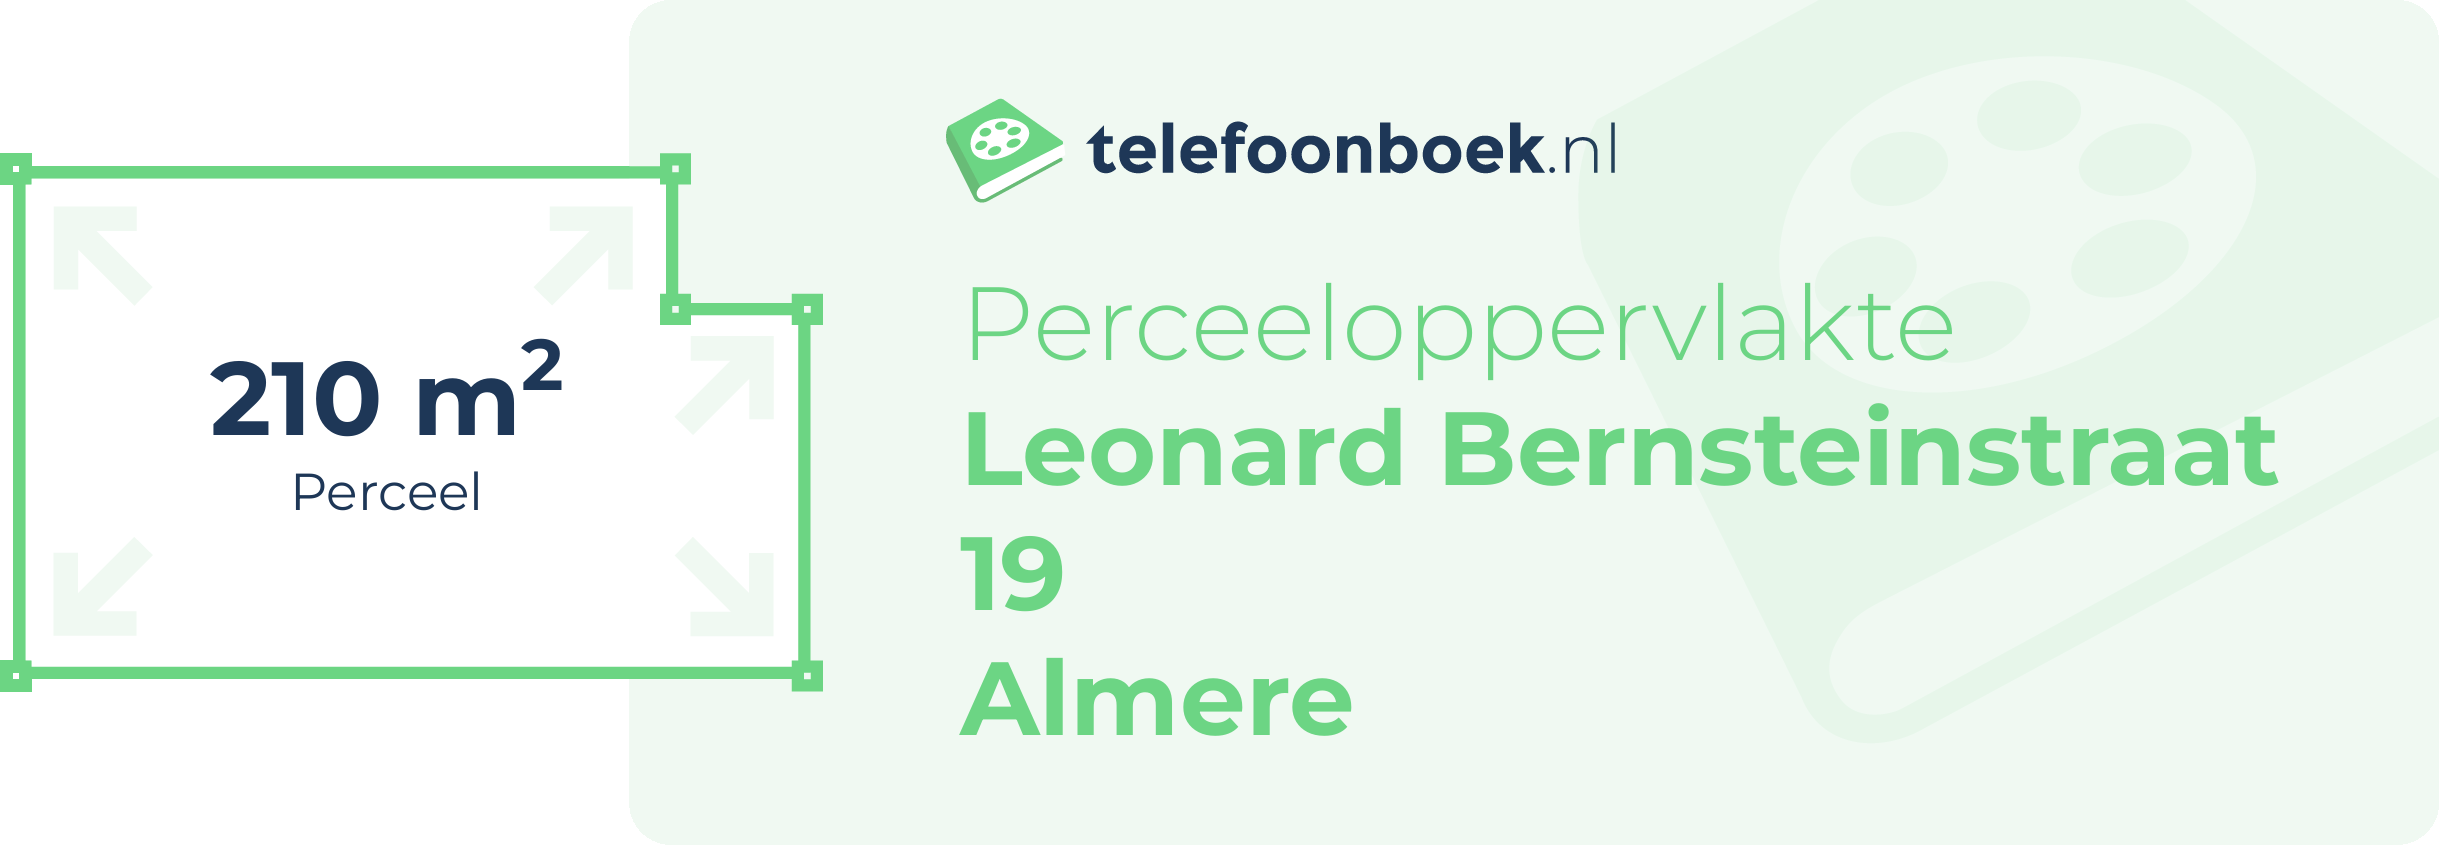 Perceeloppervlakte Leonard Bernsteinstraat 19 Almere